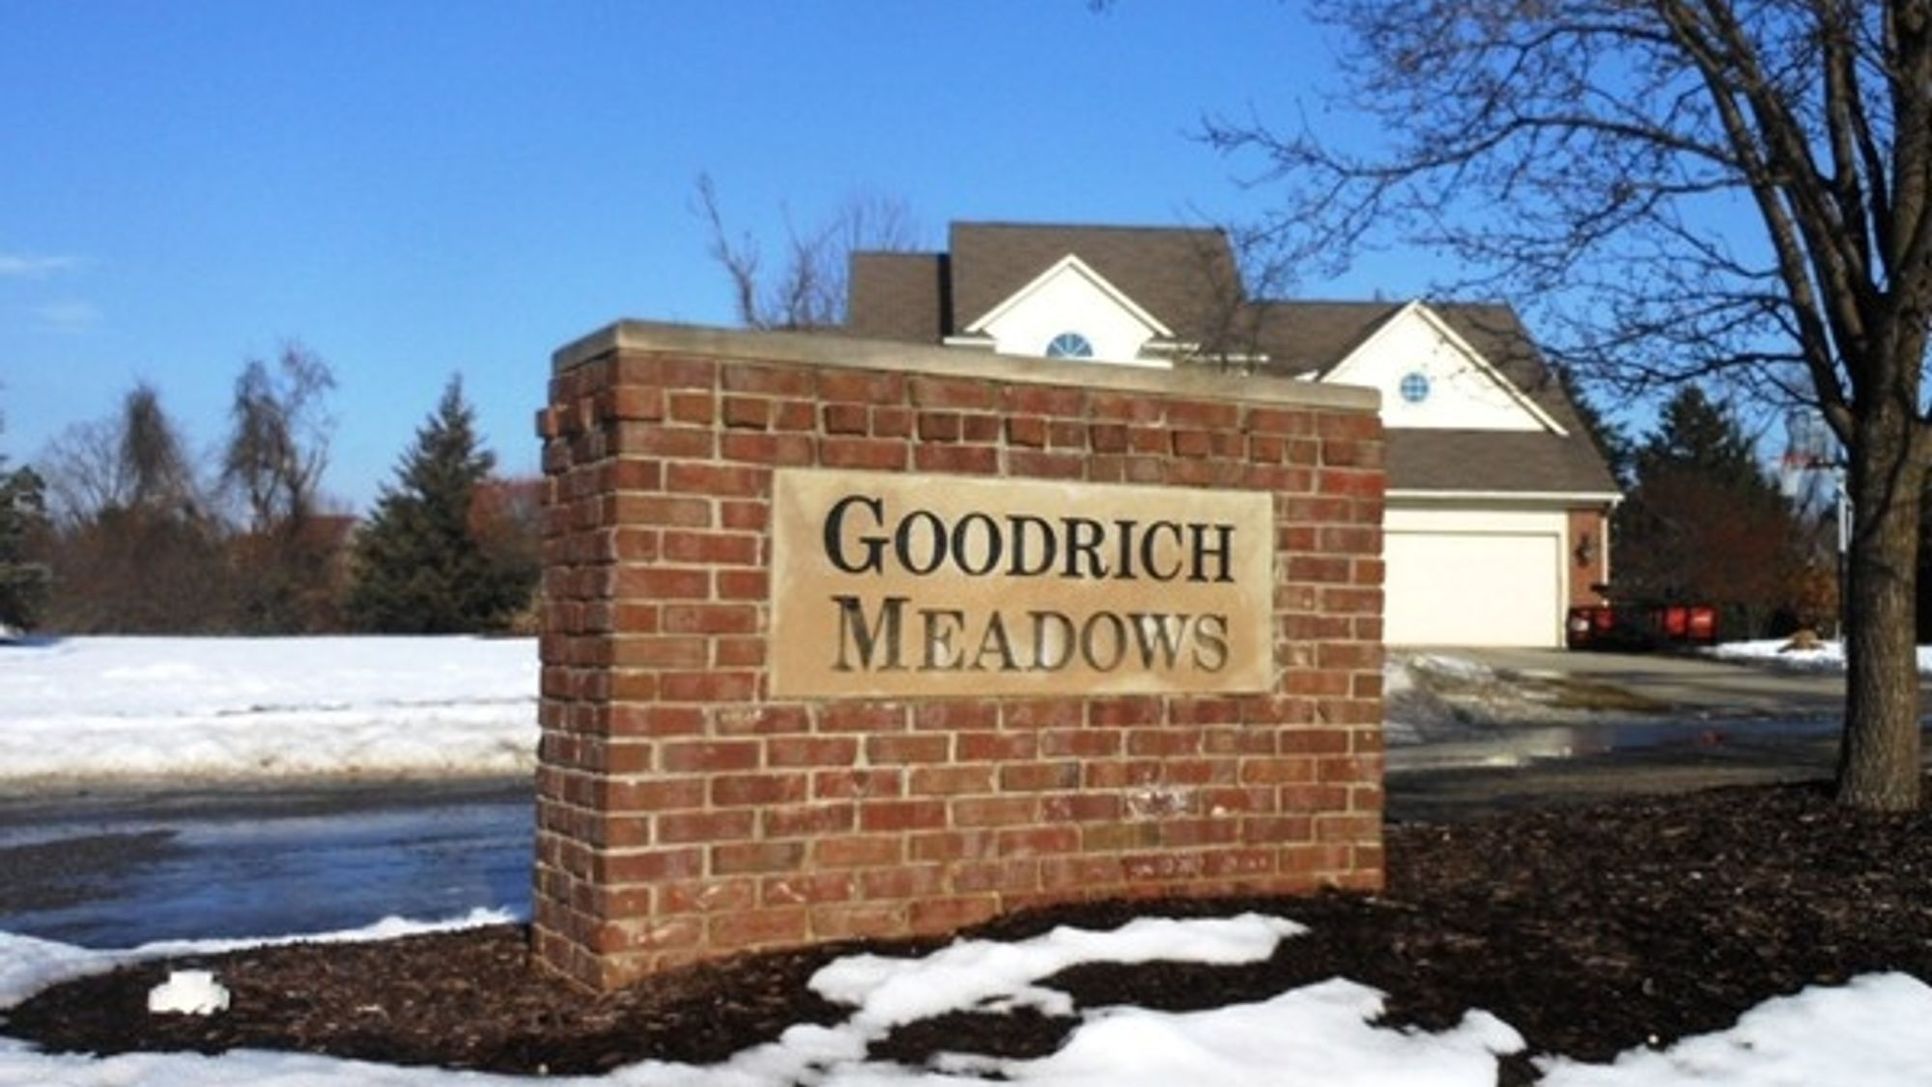 Goodrich Meadows,48438